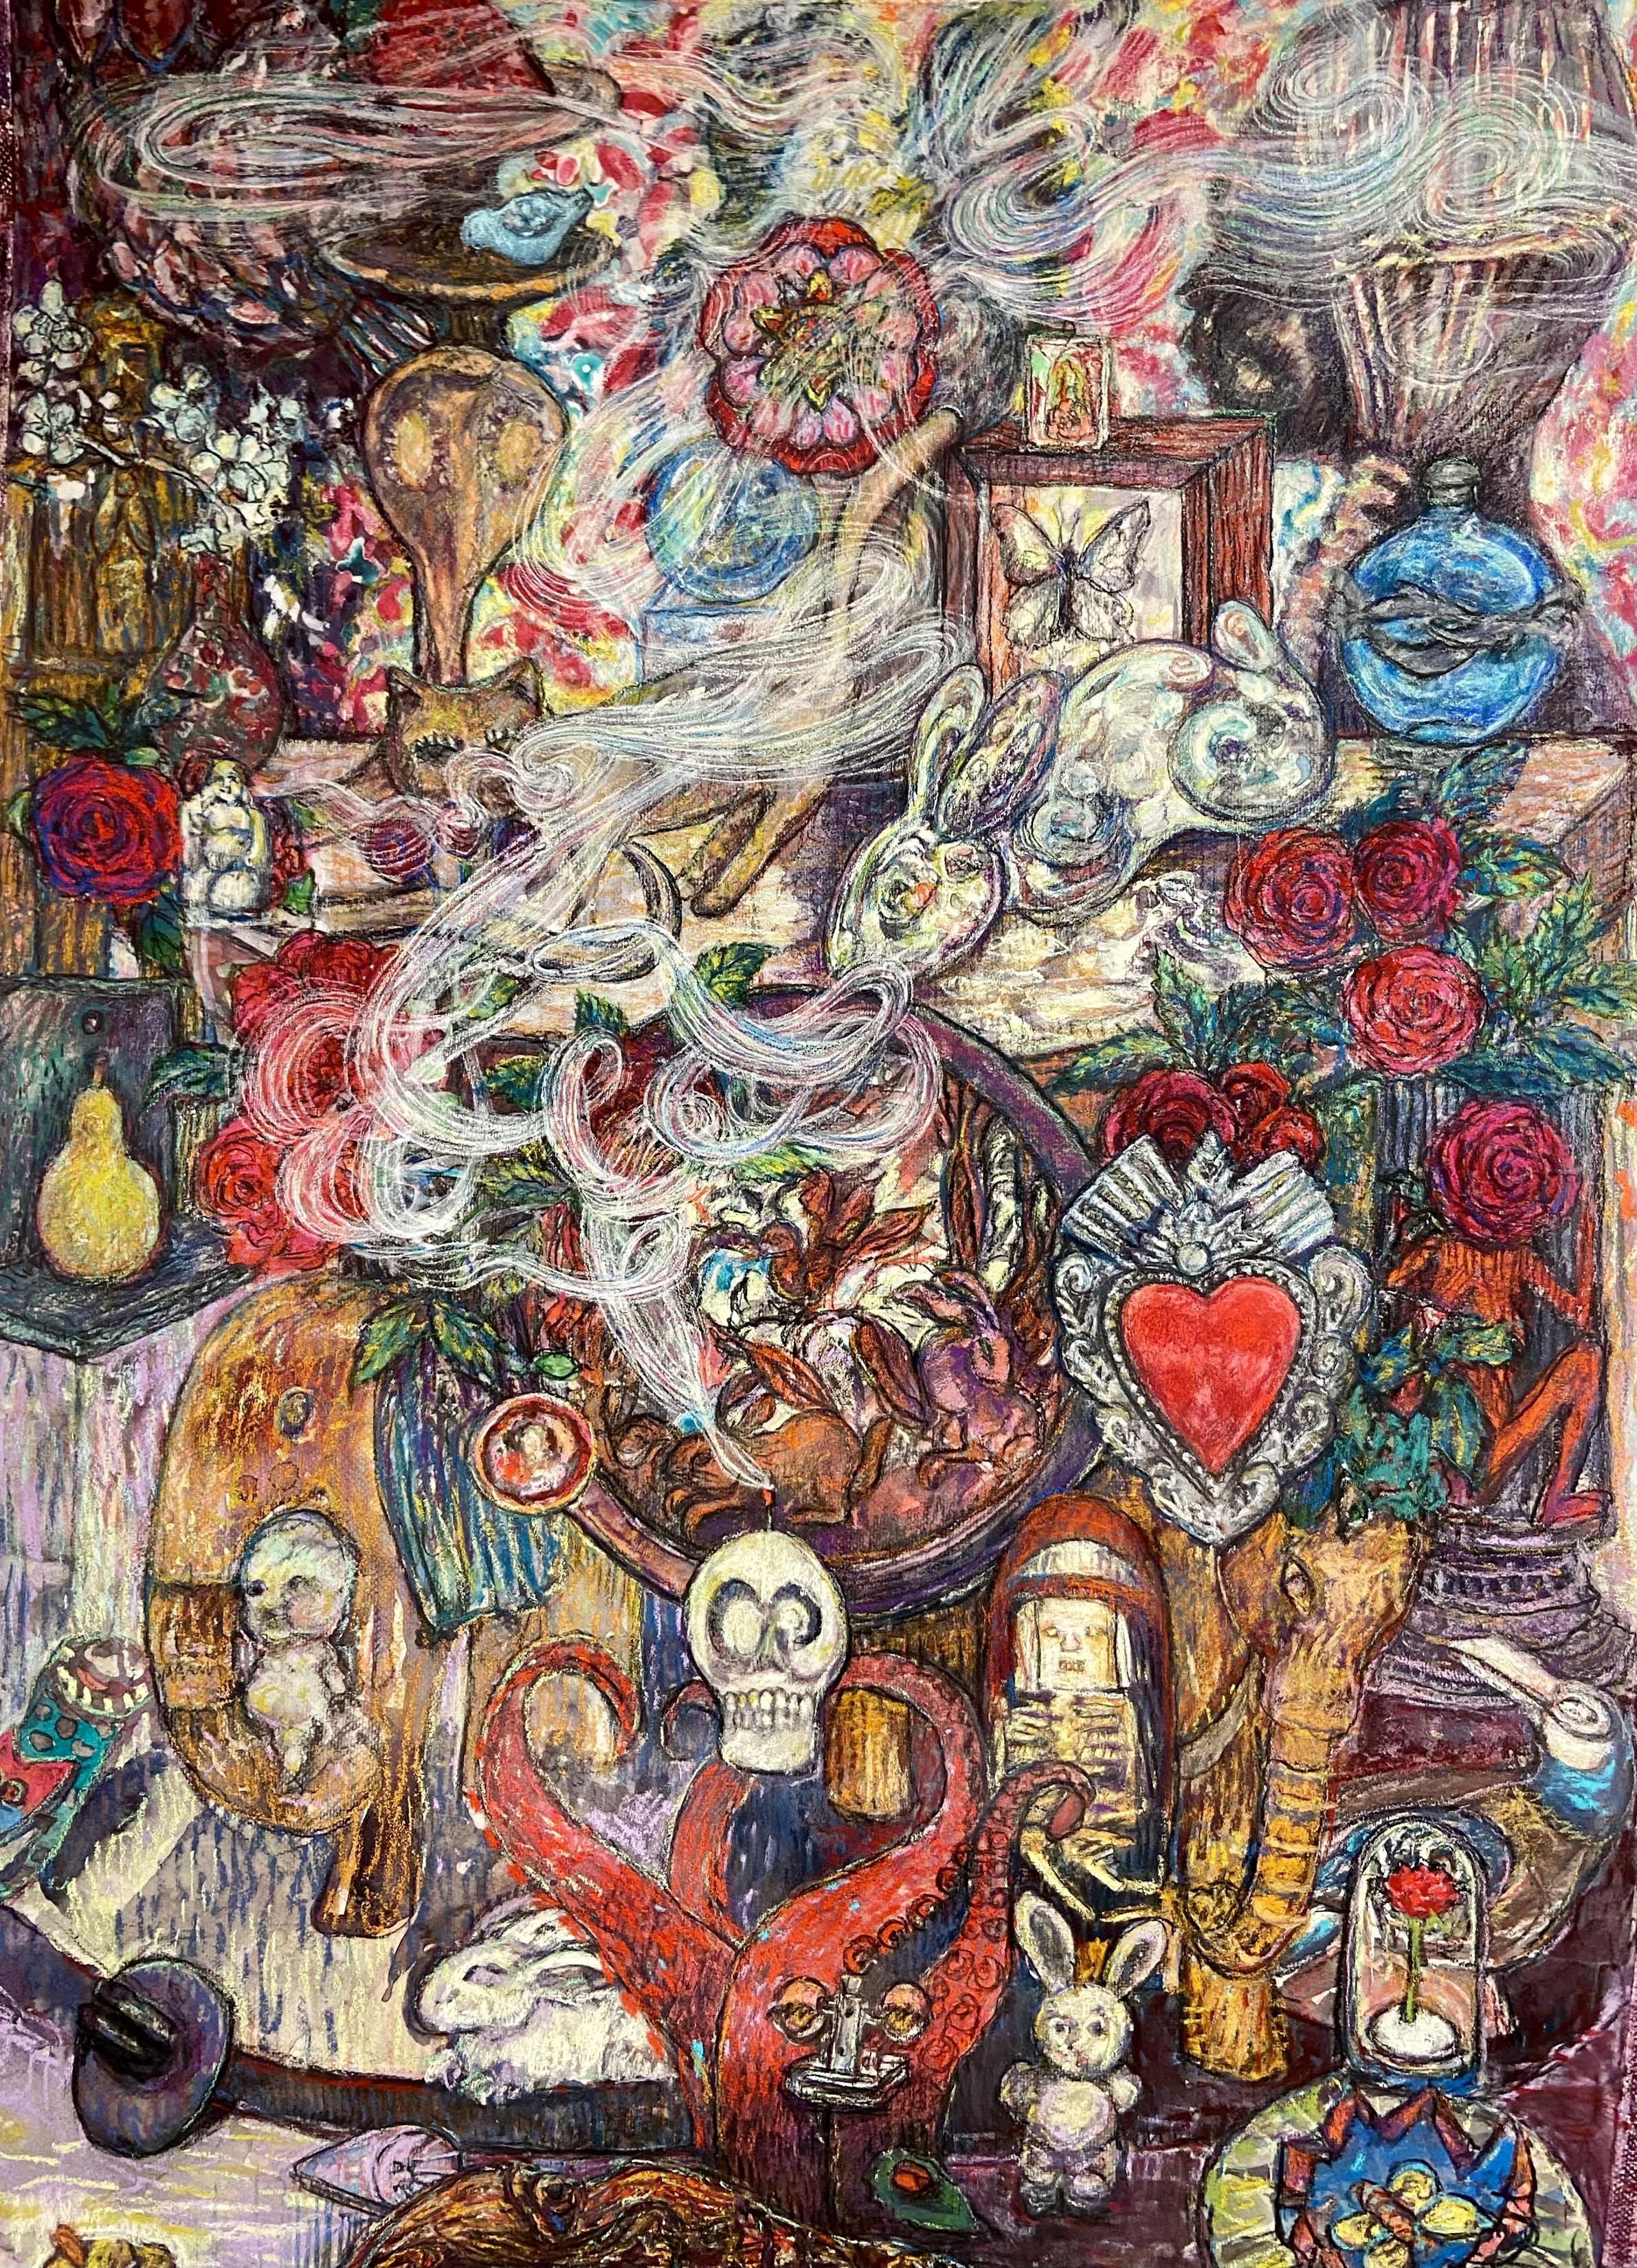 Erin Dixon Still-Life - "Souvenirs" - pastel drawing, nature, plants, still life, surreal, skull, heart